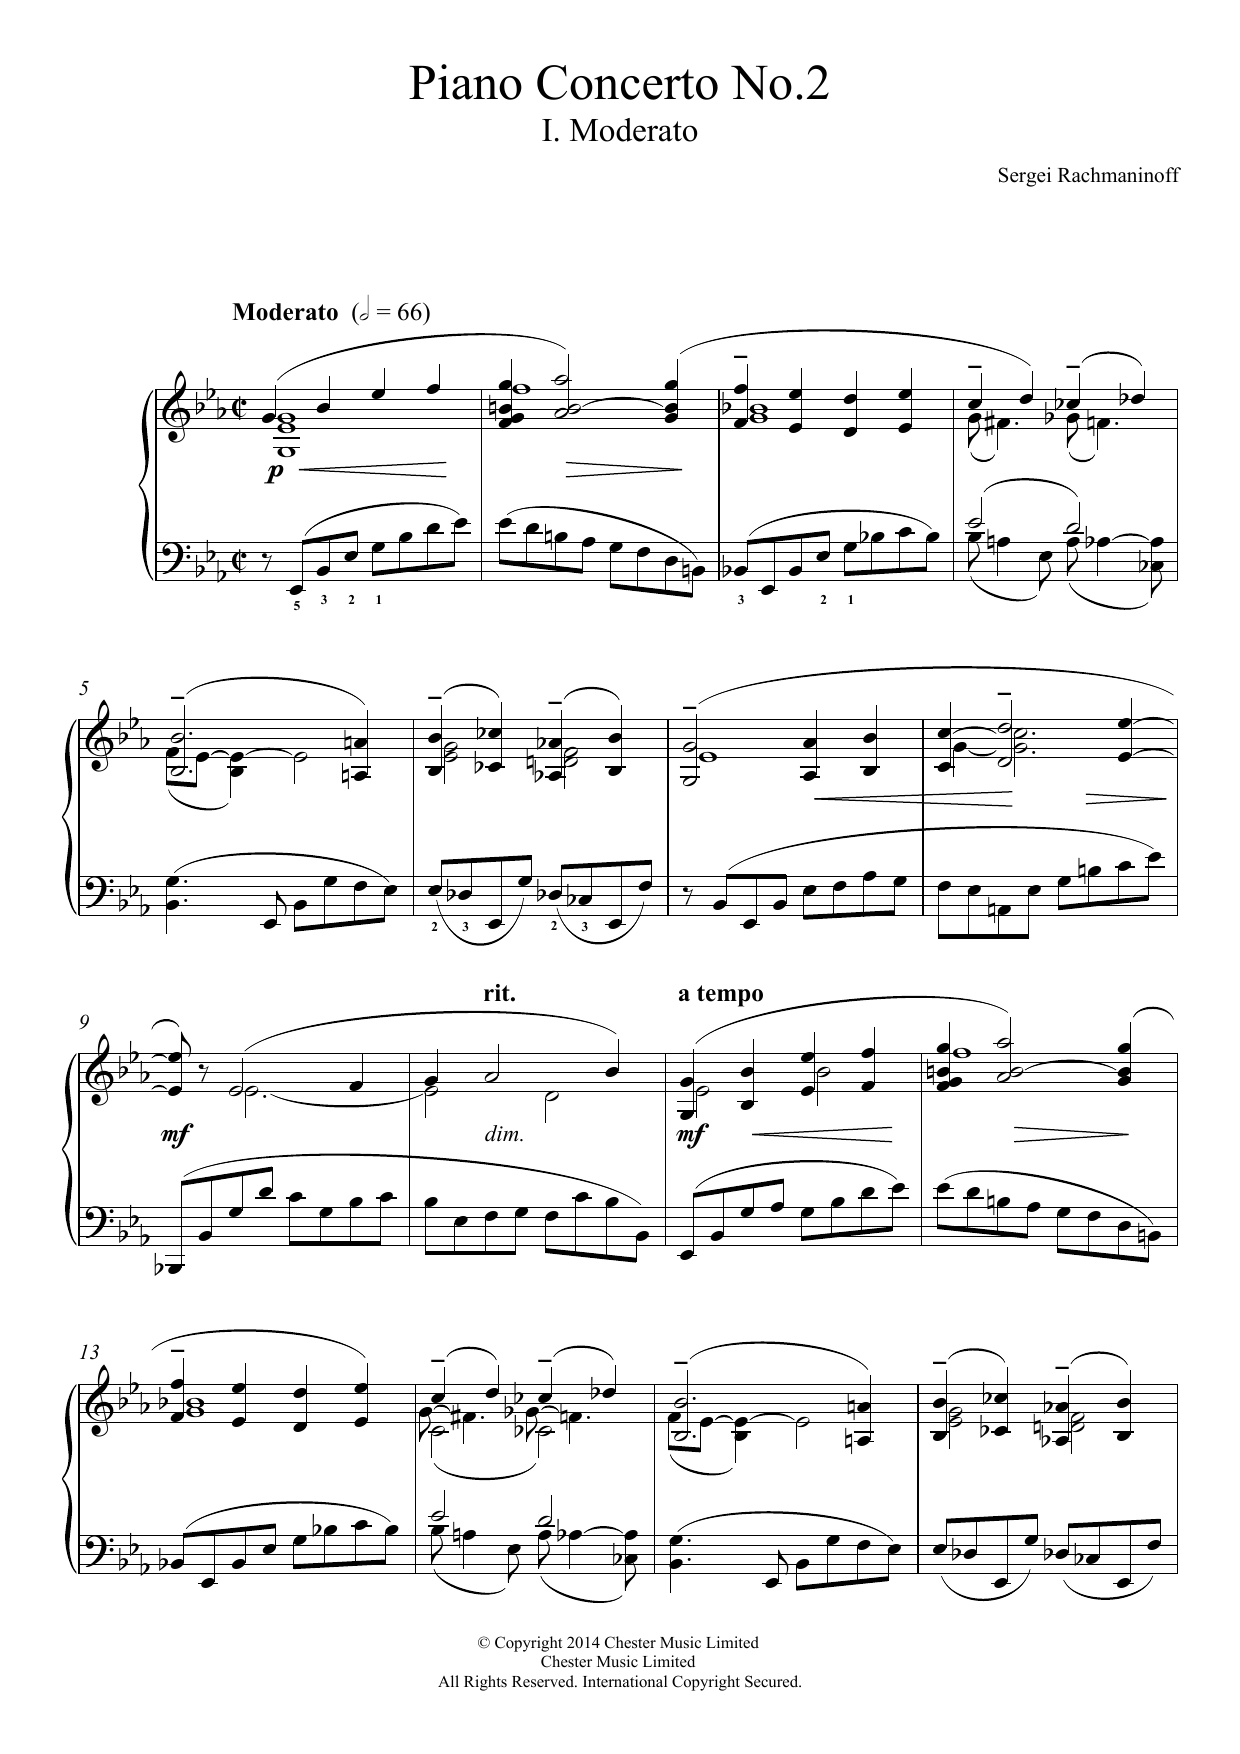 Download Sergei Rachmaninoff Piano Concerto No.2 - 1st Movement Sheet Music